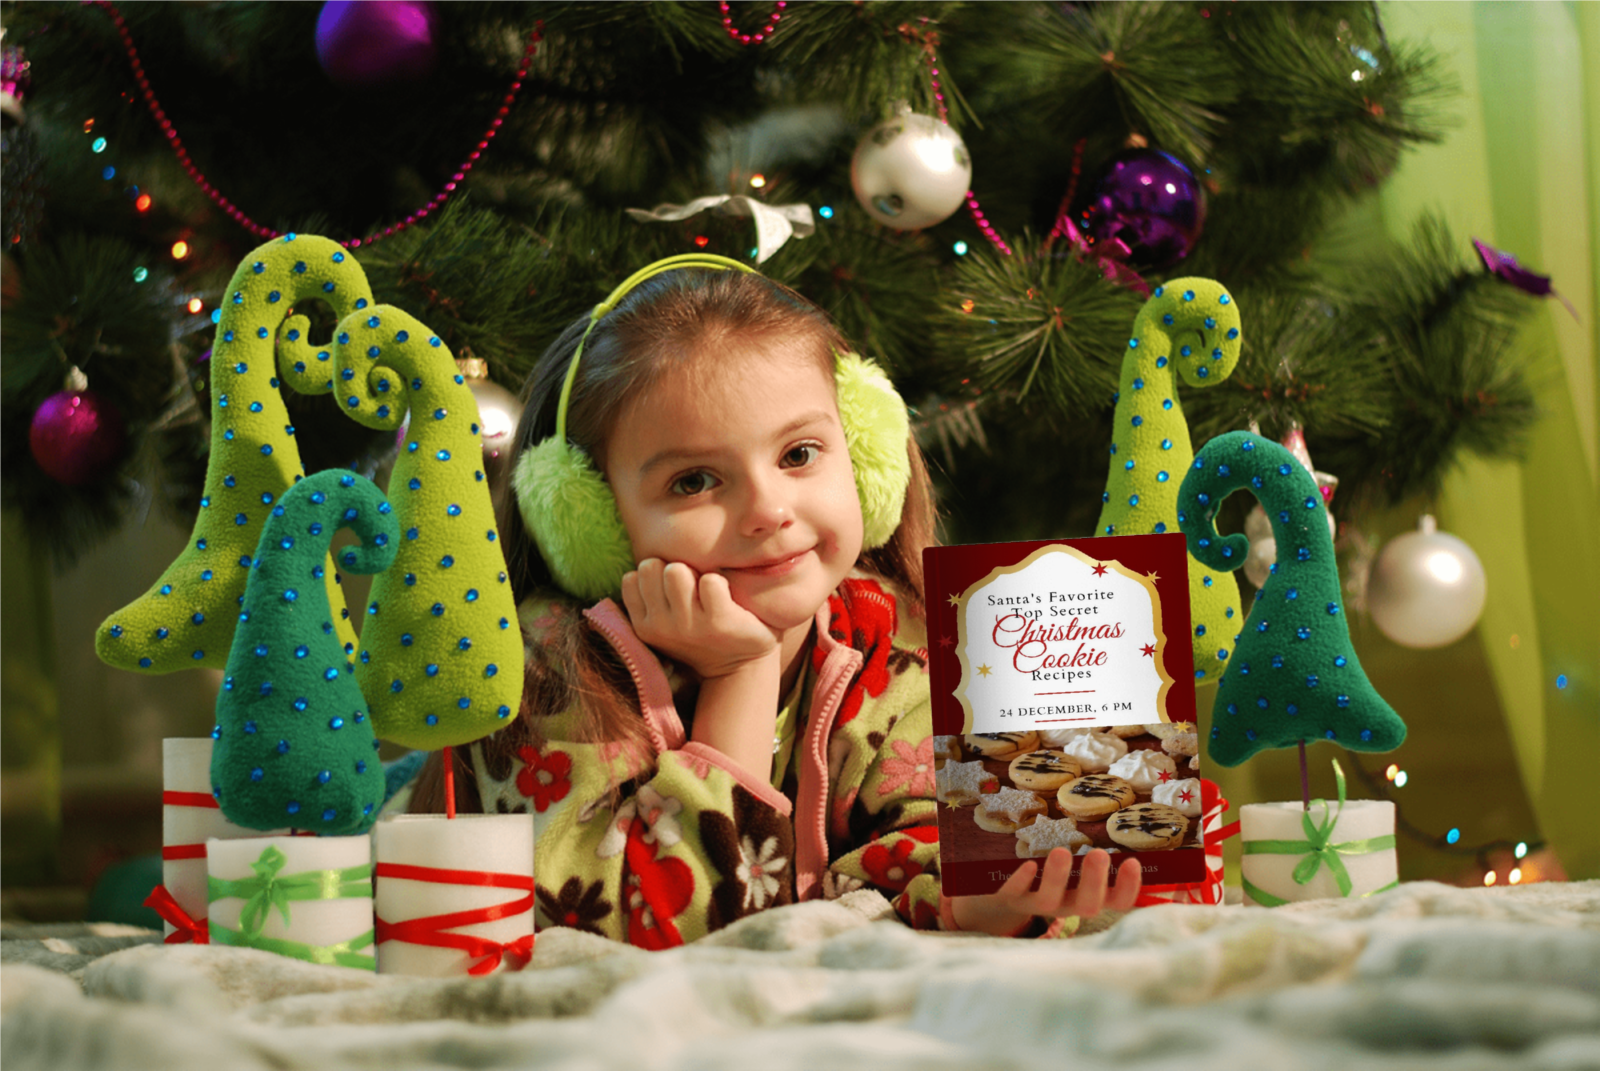 child under christmas tree holding book of Santas Top Secret Crhistmas Cookies